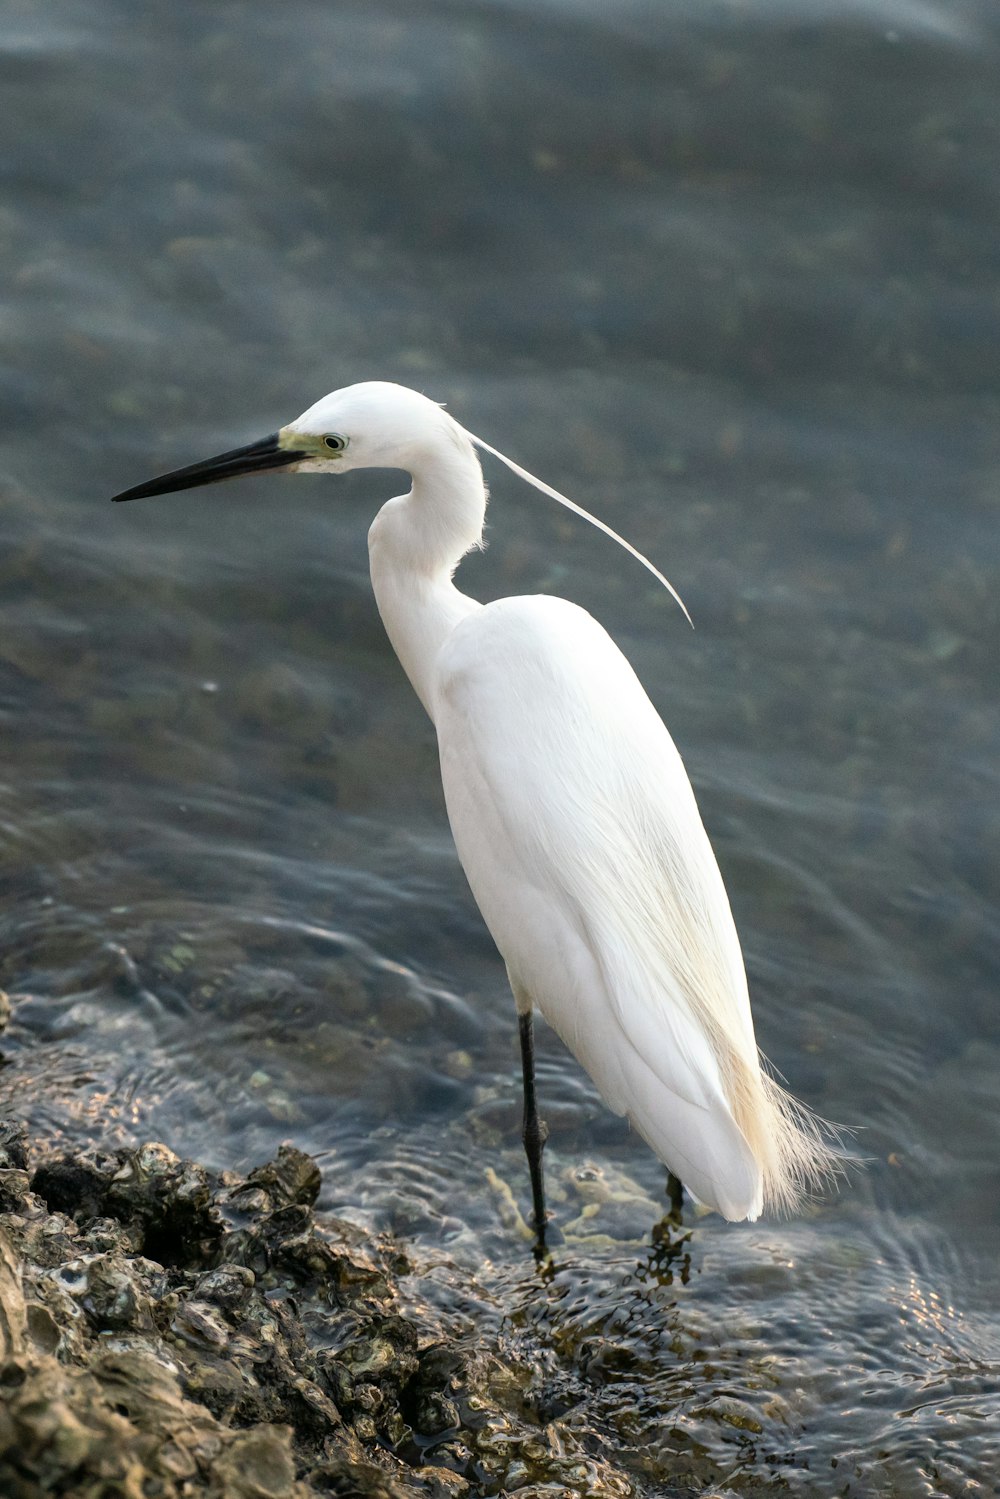 white bird on brown rock near body of water during daytime